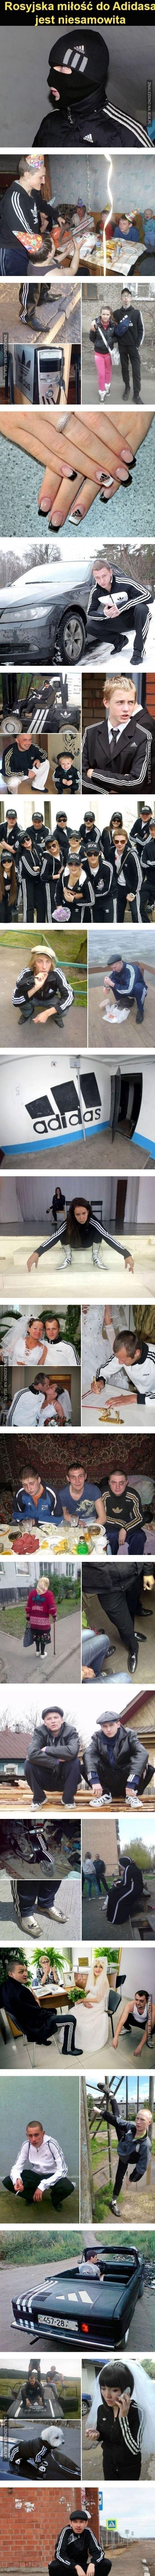 Rosja kocha Adidasa